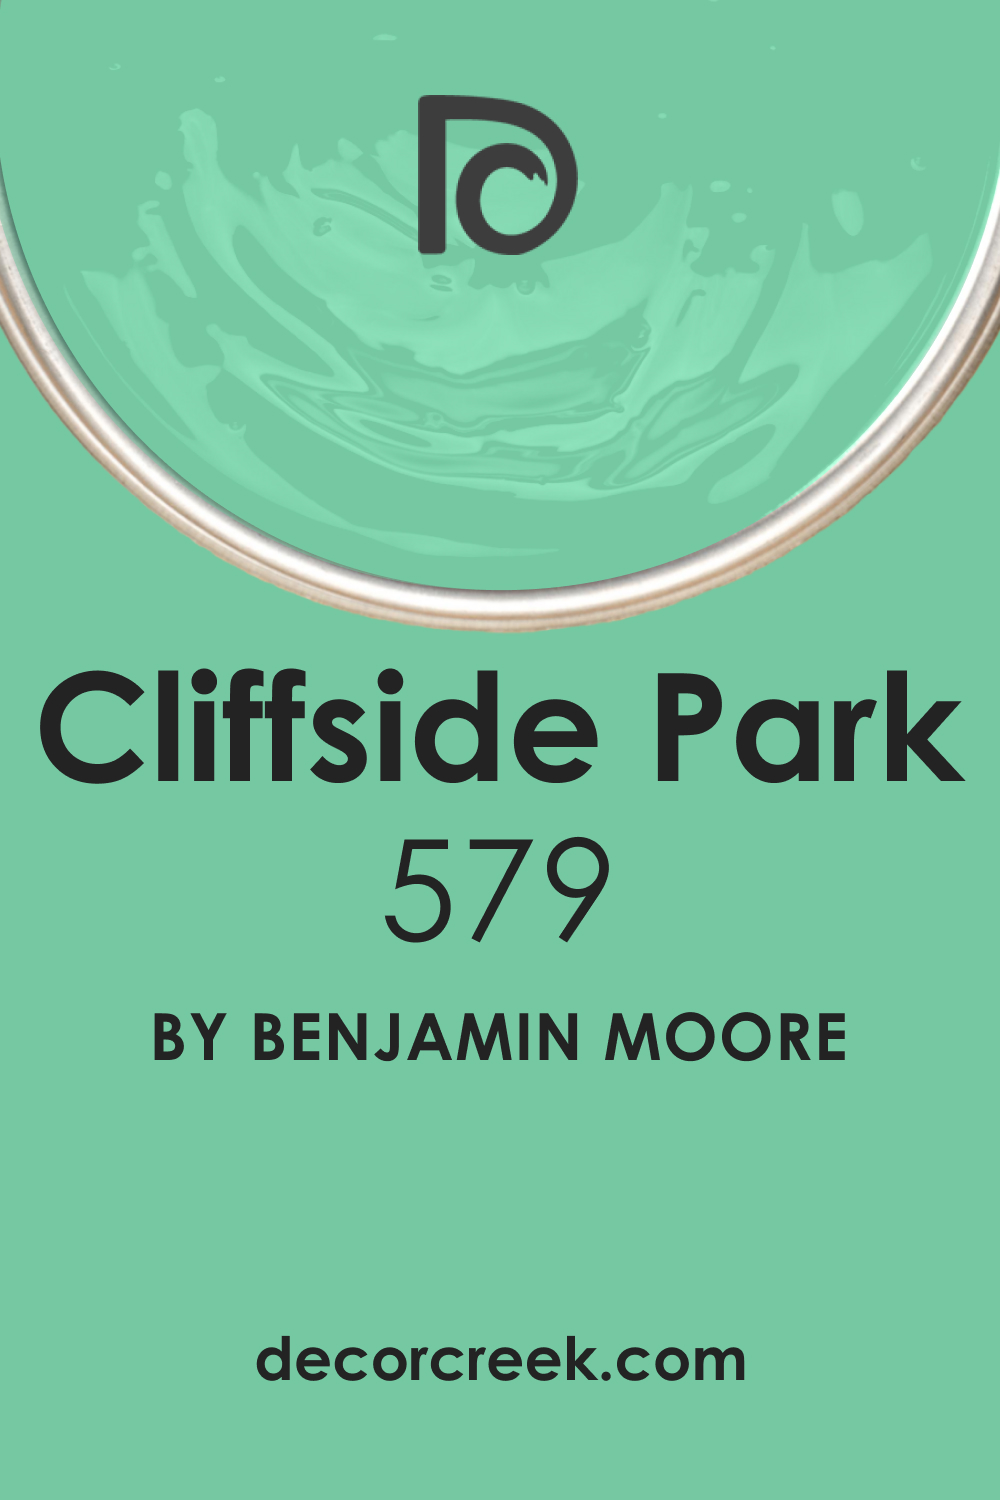 Cliffside Park 579 Paint Color by Benjamin Moore